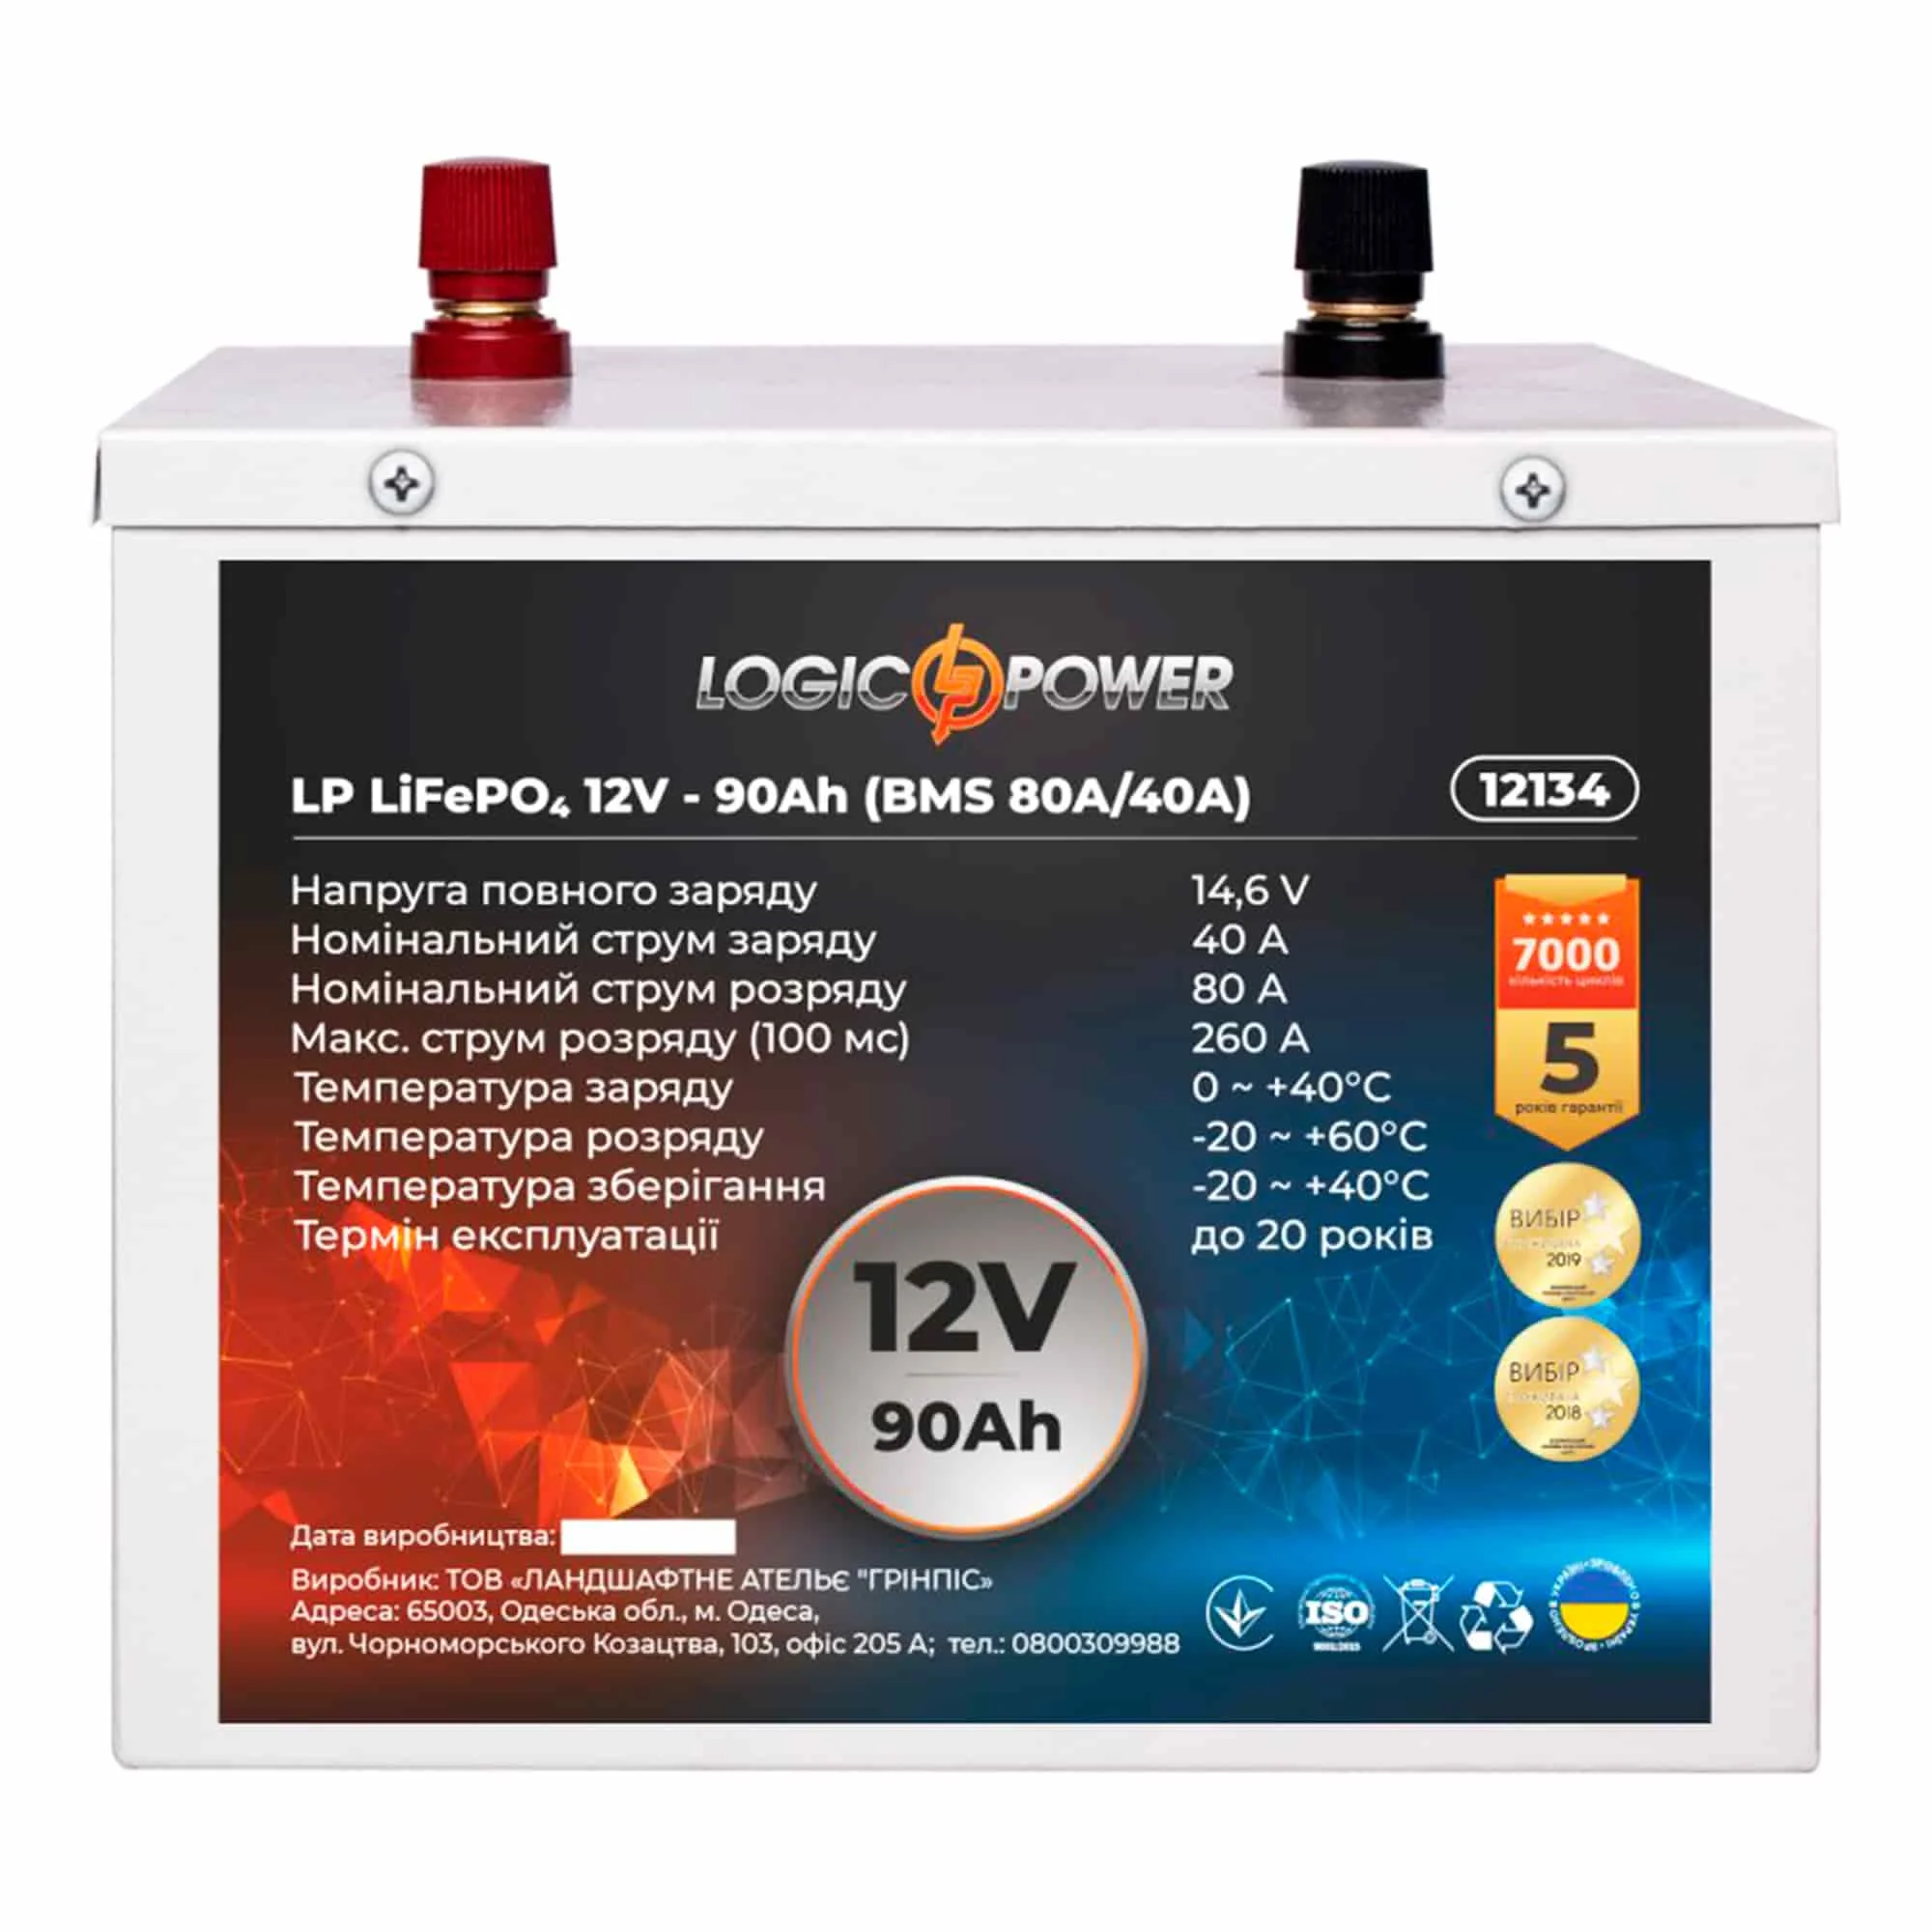 Аккумулятор Logic Power LiFePO4 6CT-90Ah 1152Wh BMS 80A/40A Аз (LP12134)